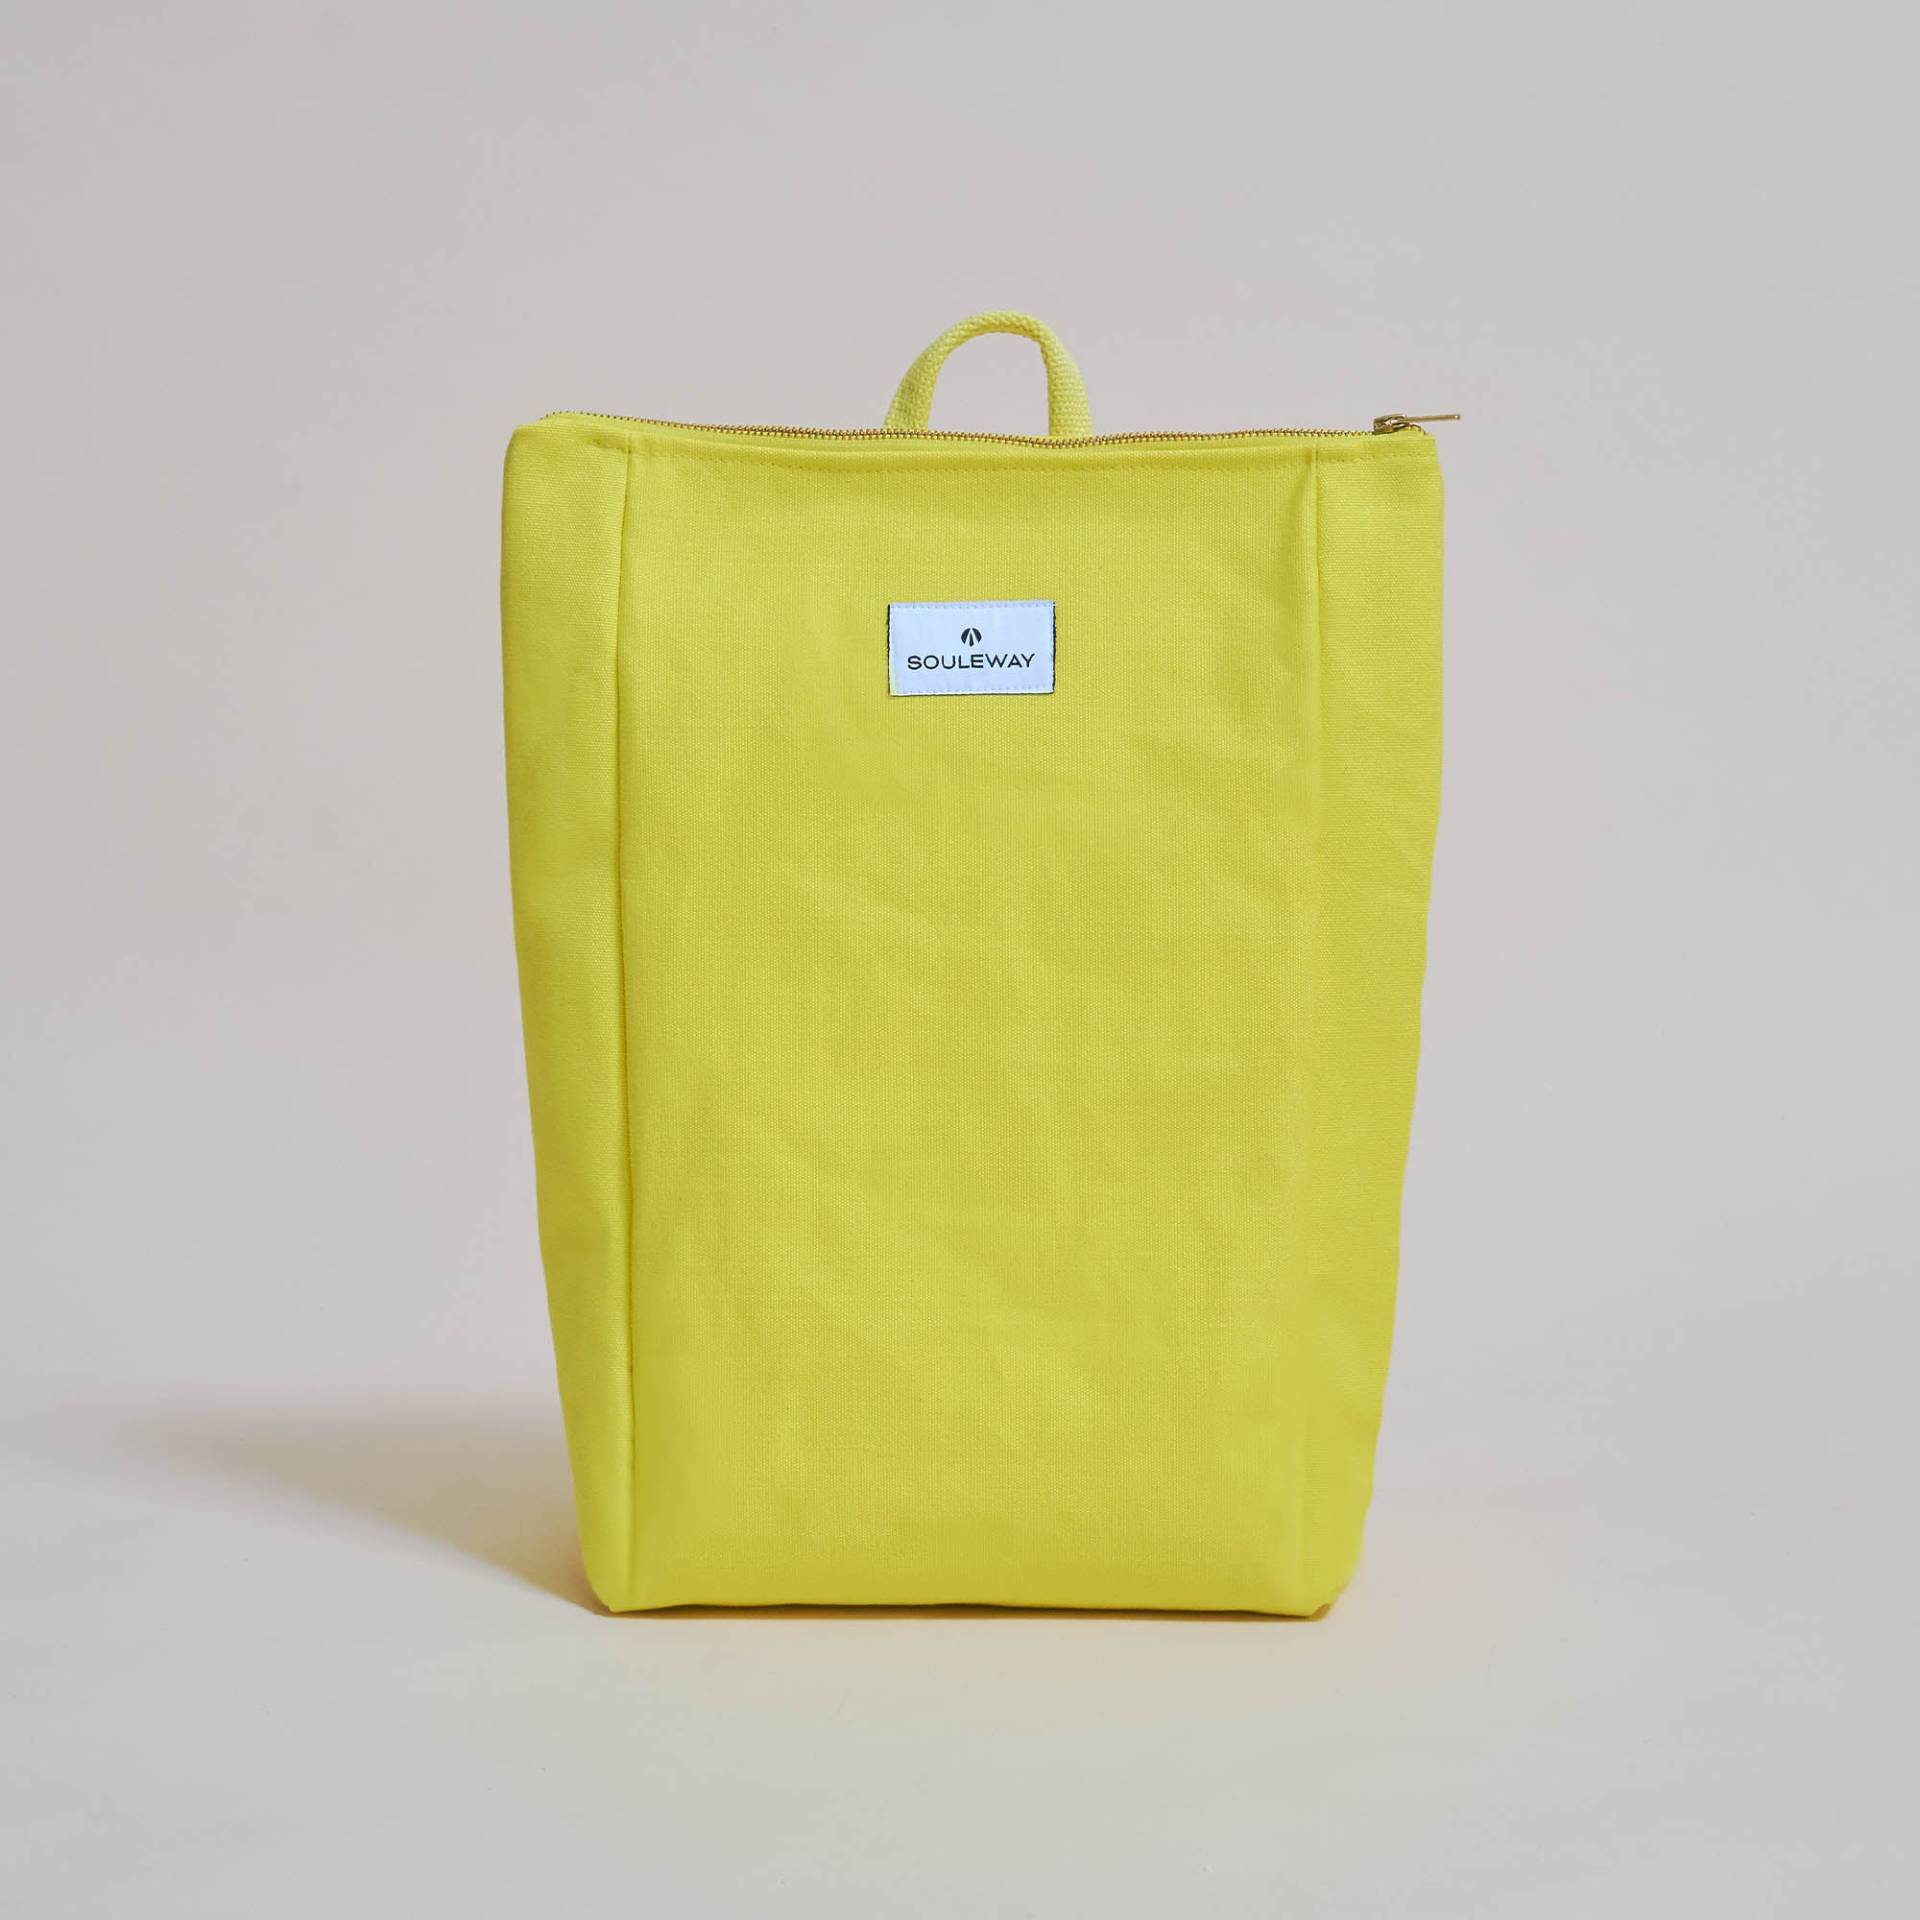 SOULEWAY - Simple Backpack L, Rucksack, 15 Liter Volumen, Laptopfach 13 Zoll, Made in Germany, Handgepäck, vegan, wasserabweisend, Bright Lemon von Souleway